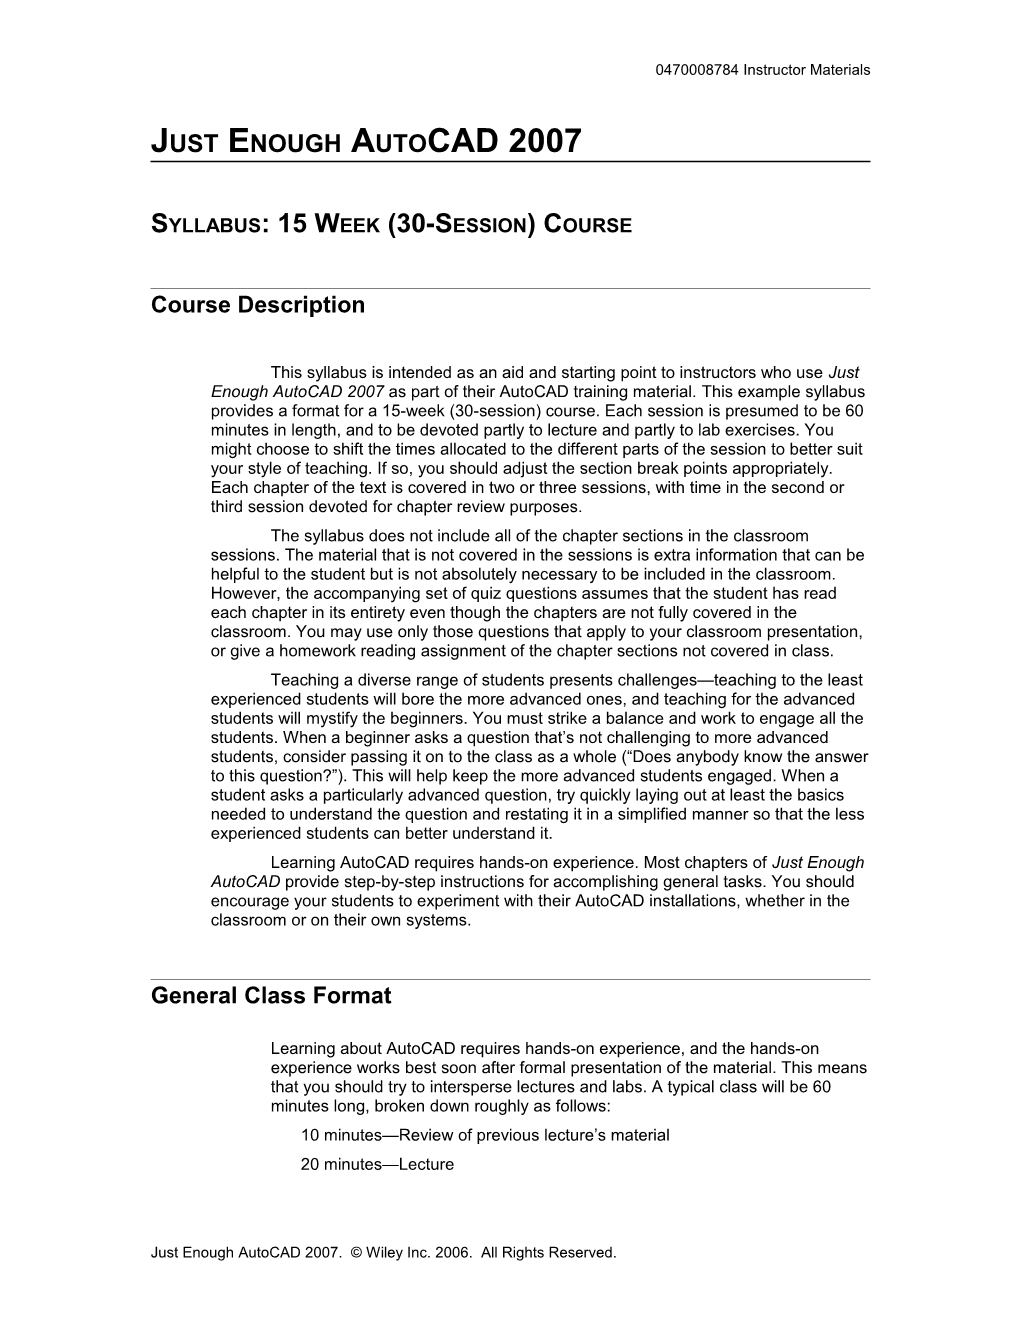 Linux+ Study Guide Syllabus: Short Form